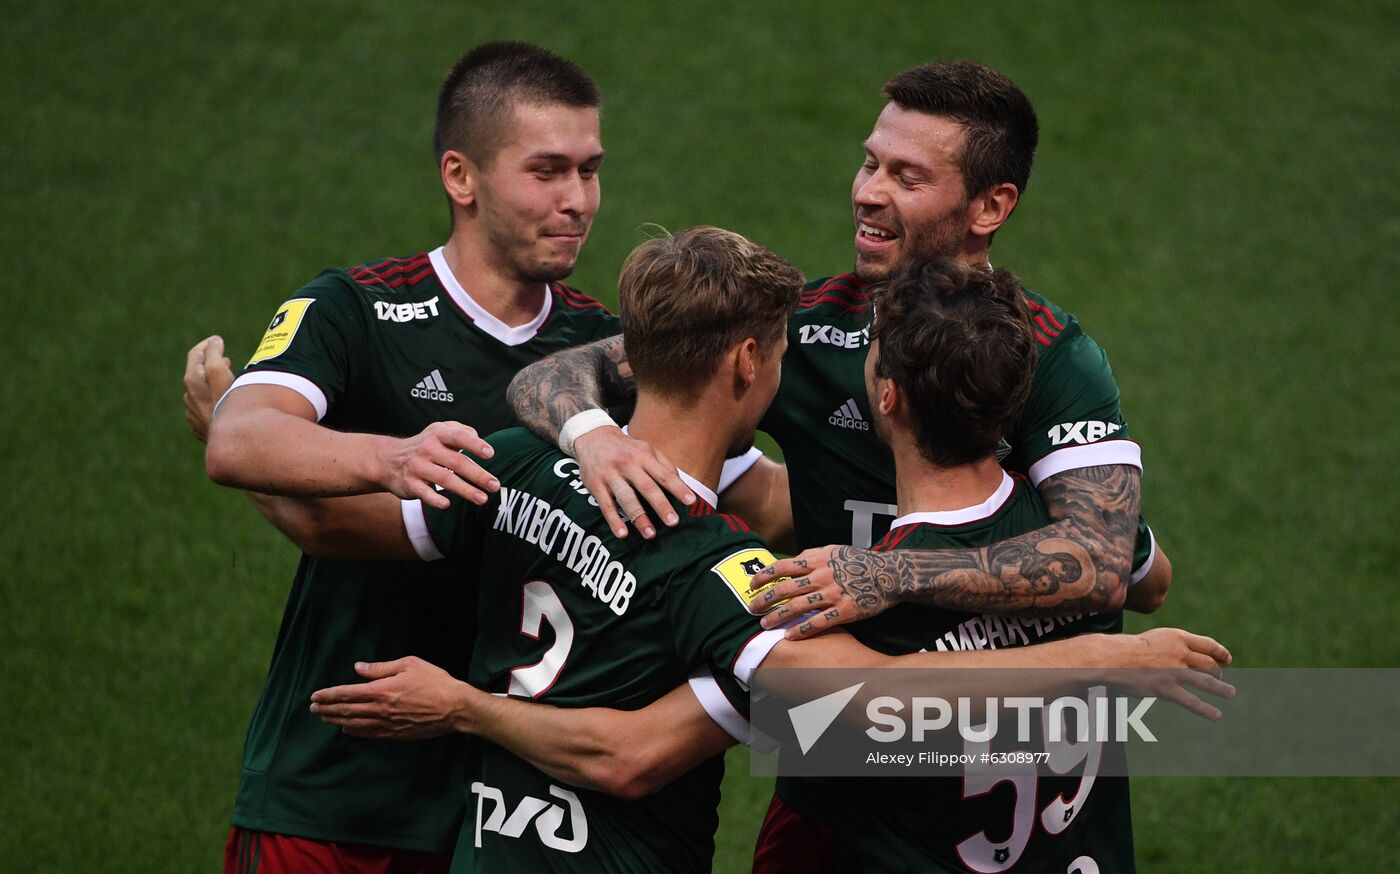 Russia Soccer Premier-League Lokomotiv - Krasnodar